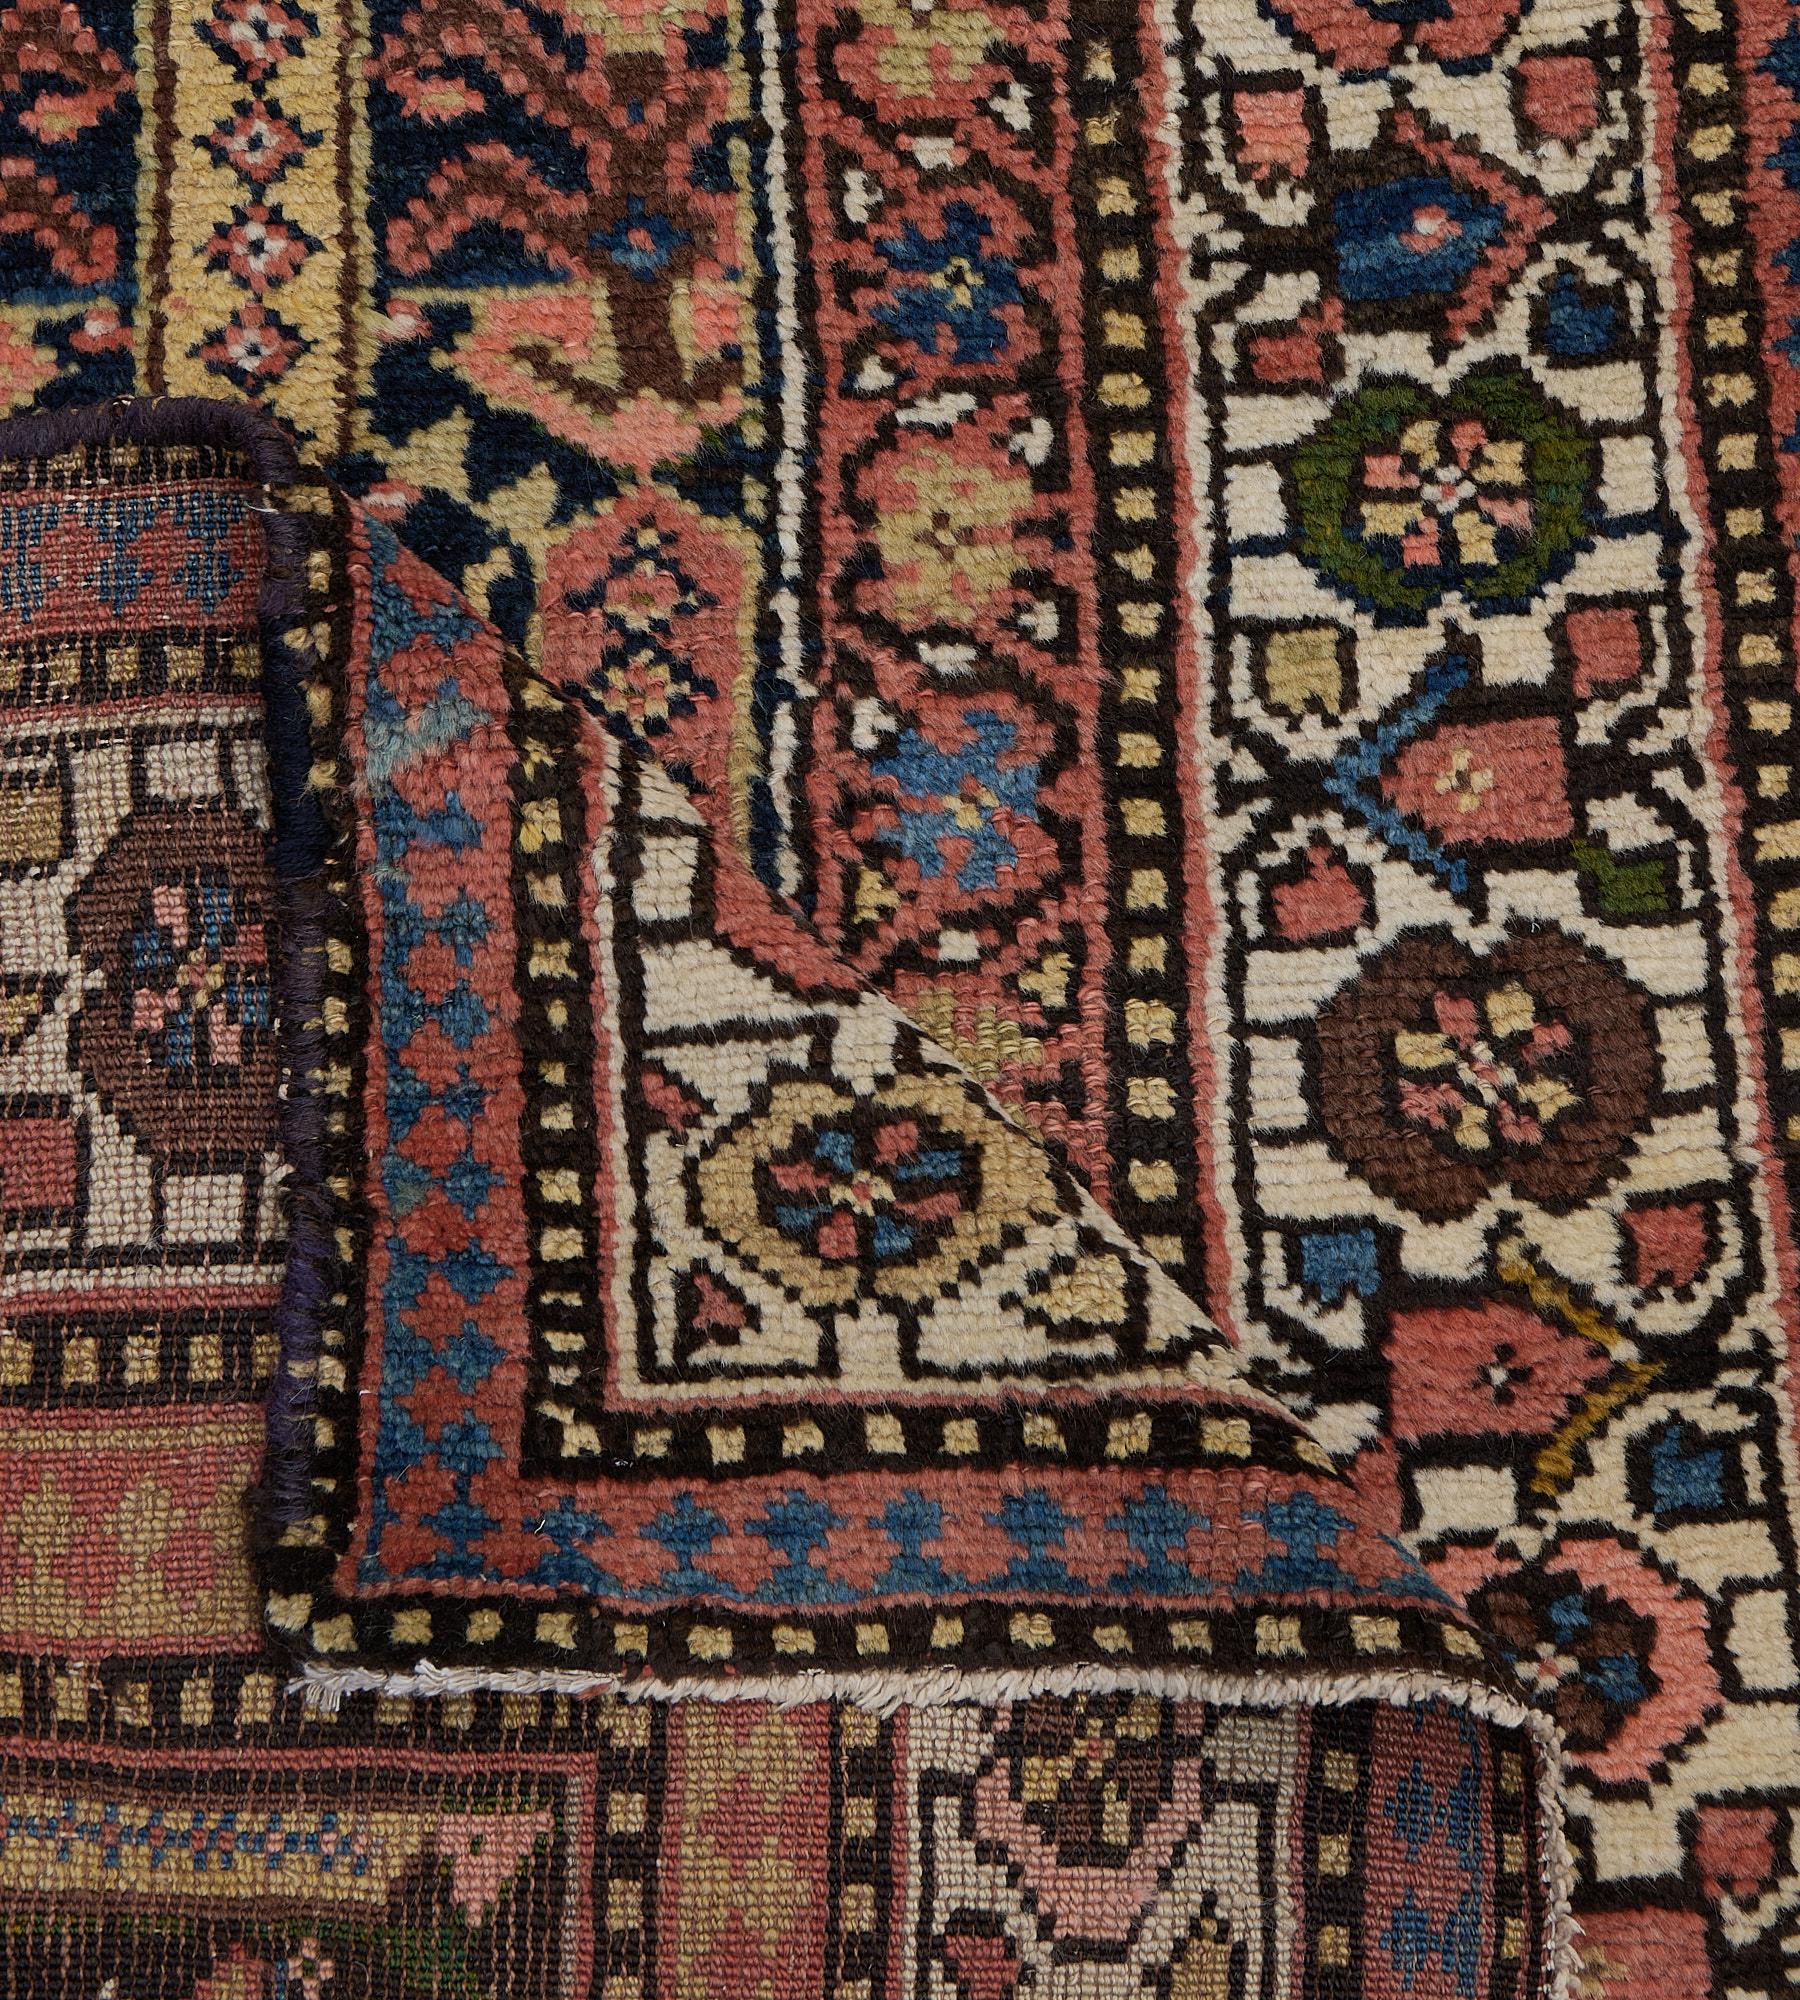 Wool Antique Hand-Woven Circa-1900 Persian Kurdish Runner For Sale 2